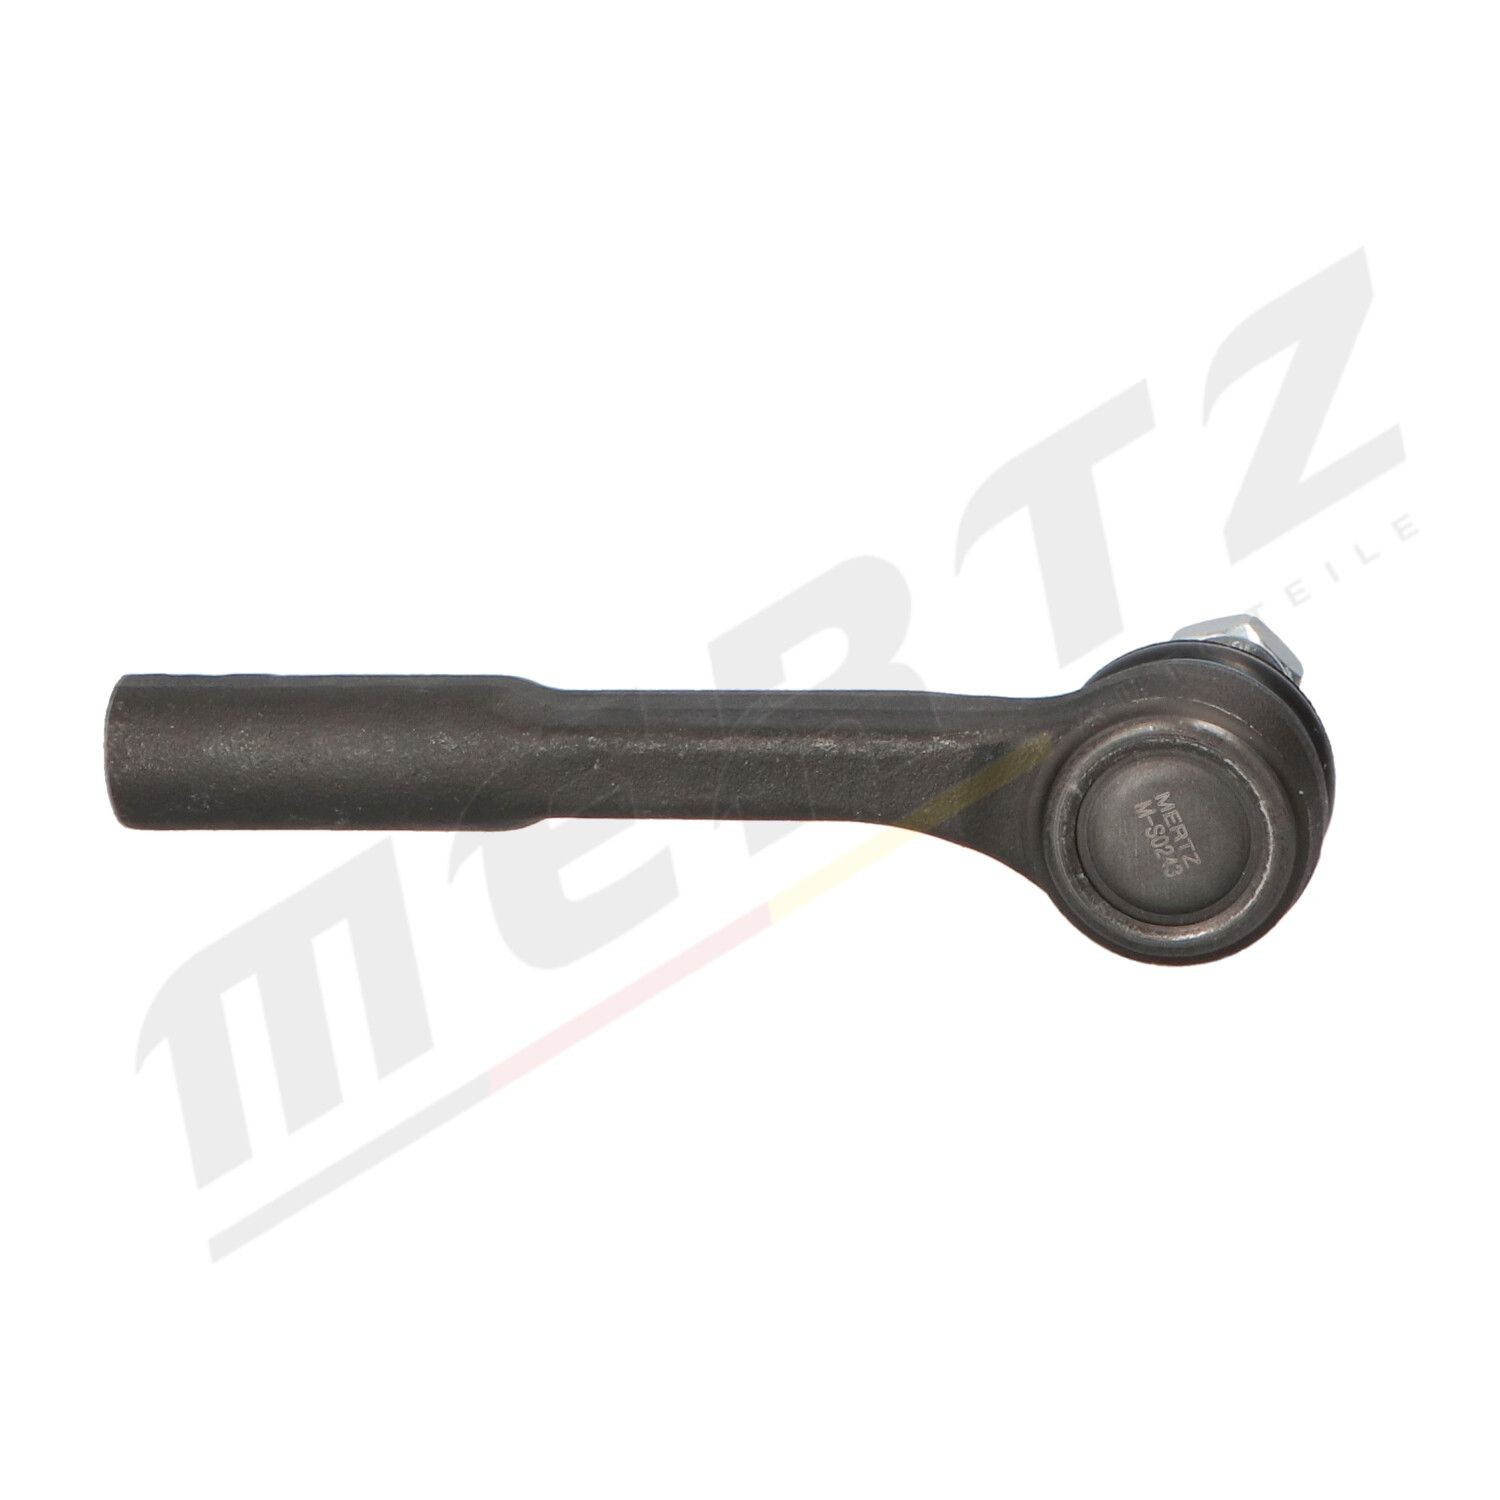 M-S0243 Tie rod end M-S0243 MERTZ Front Axle Left, with self-locking nut